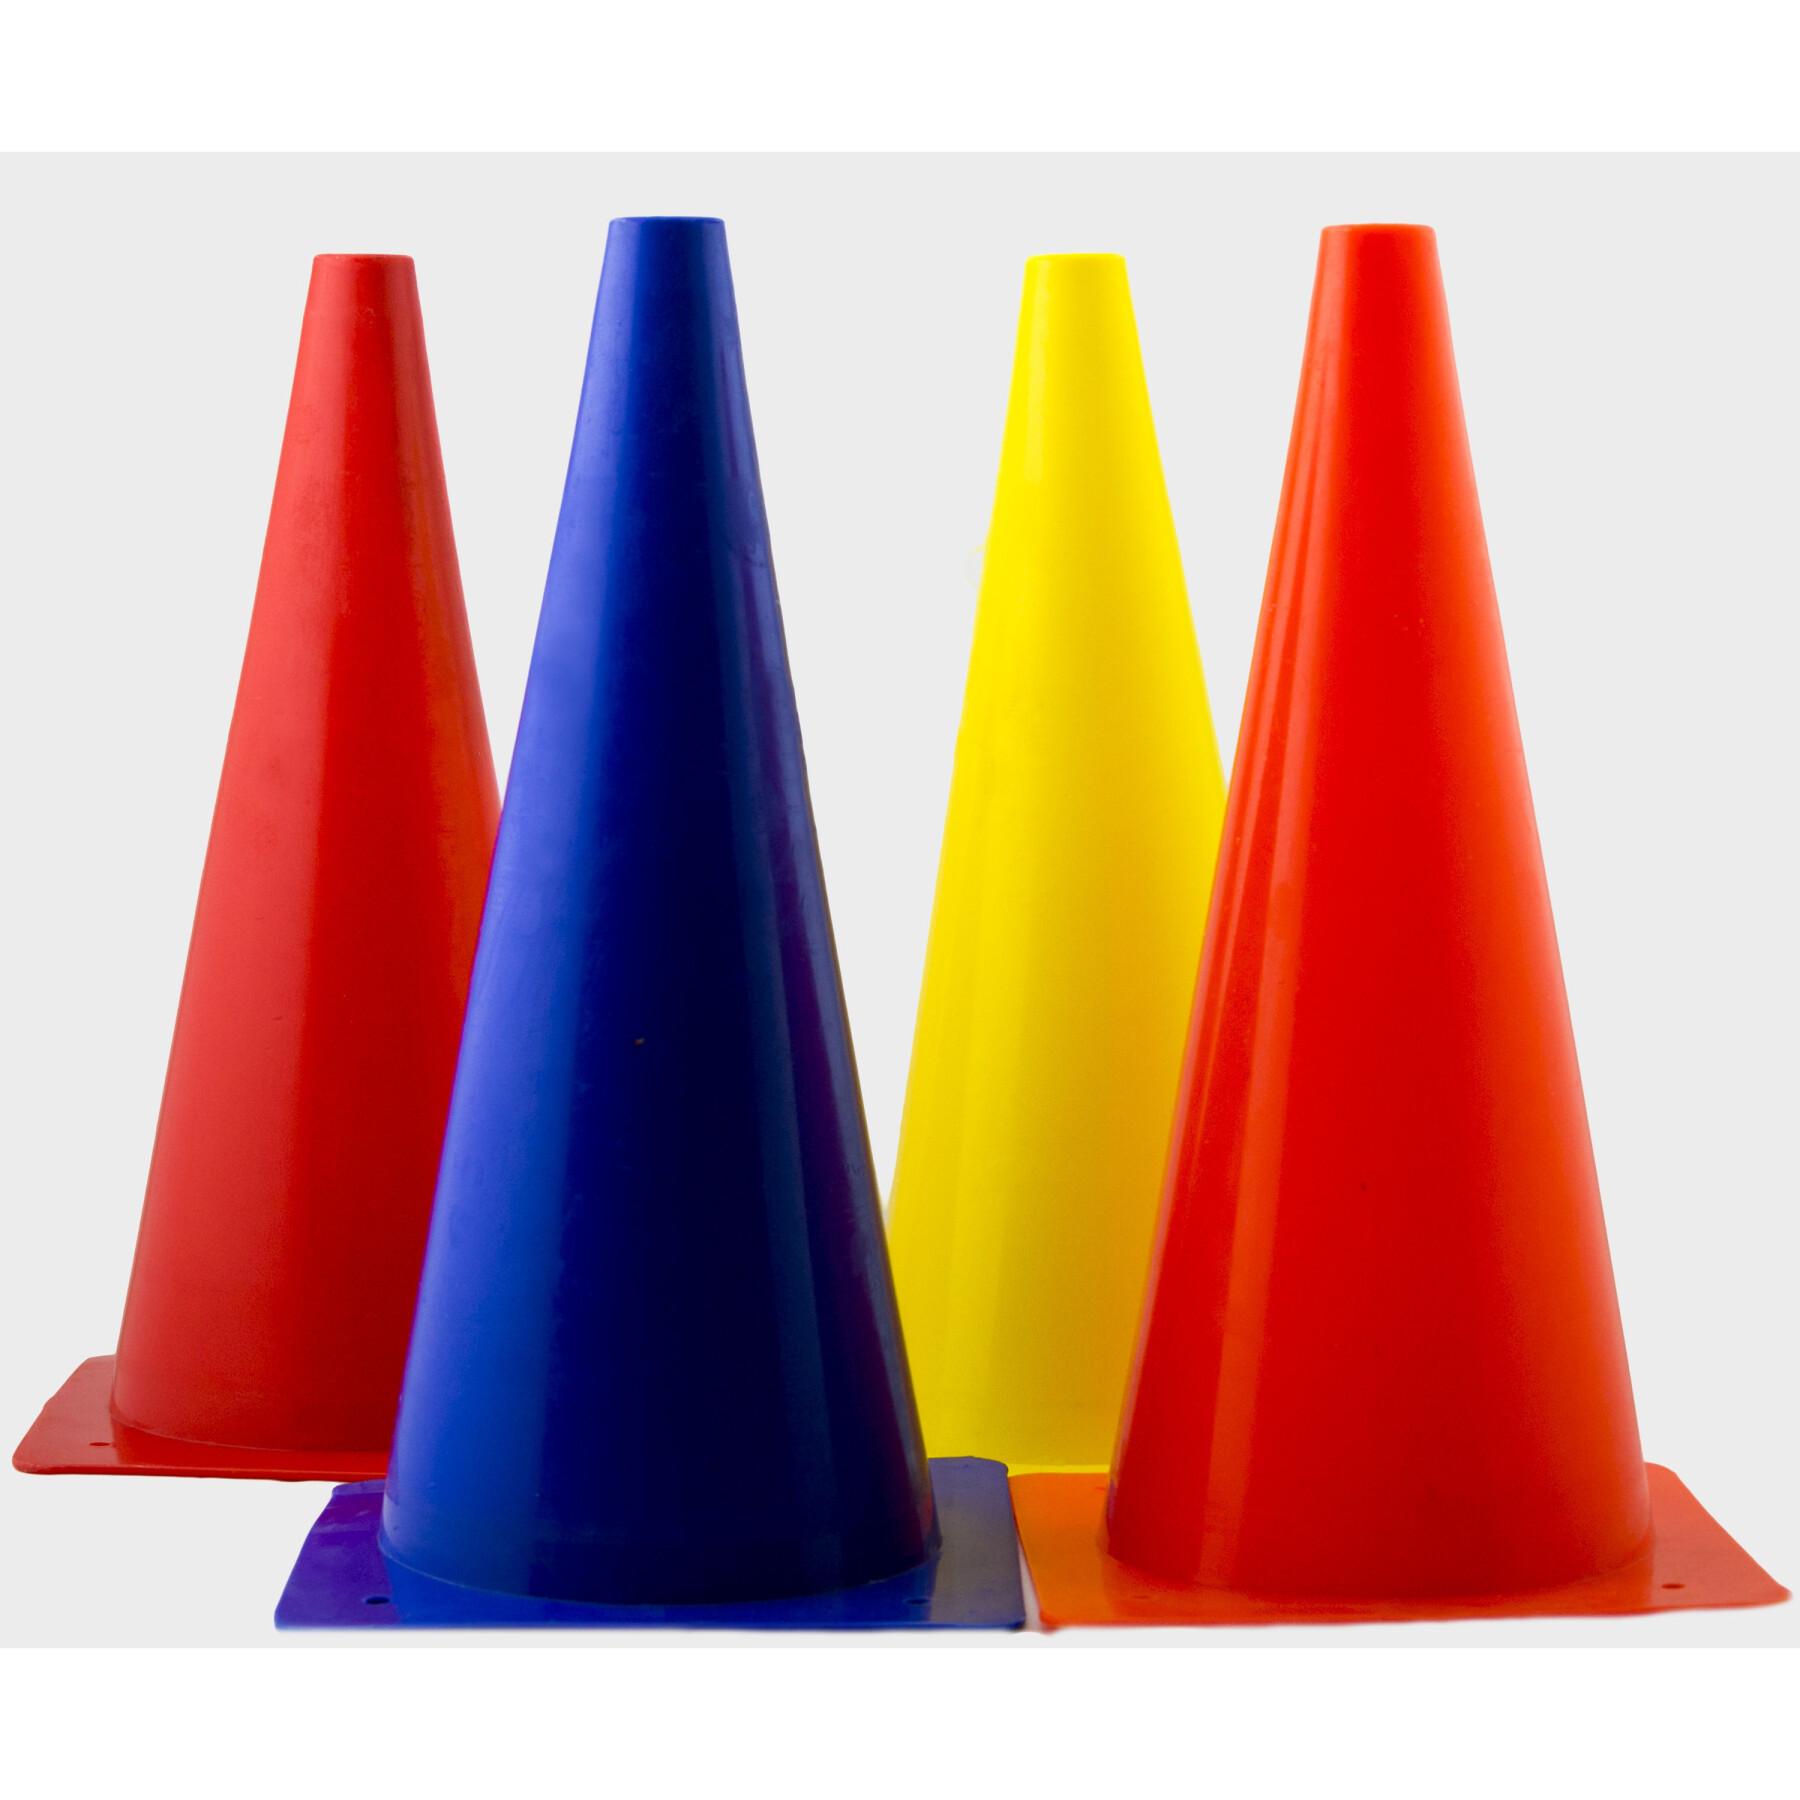 Set of 4 boundary cones - 38 cm PowerShot